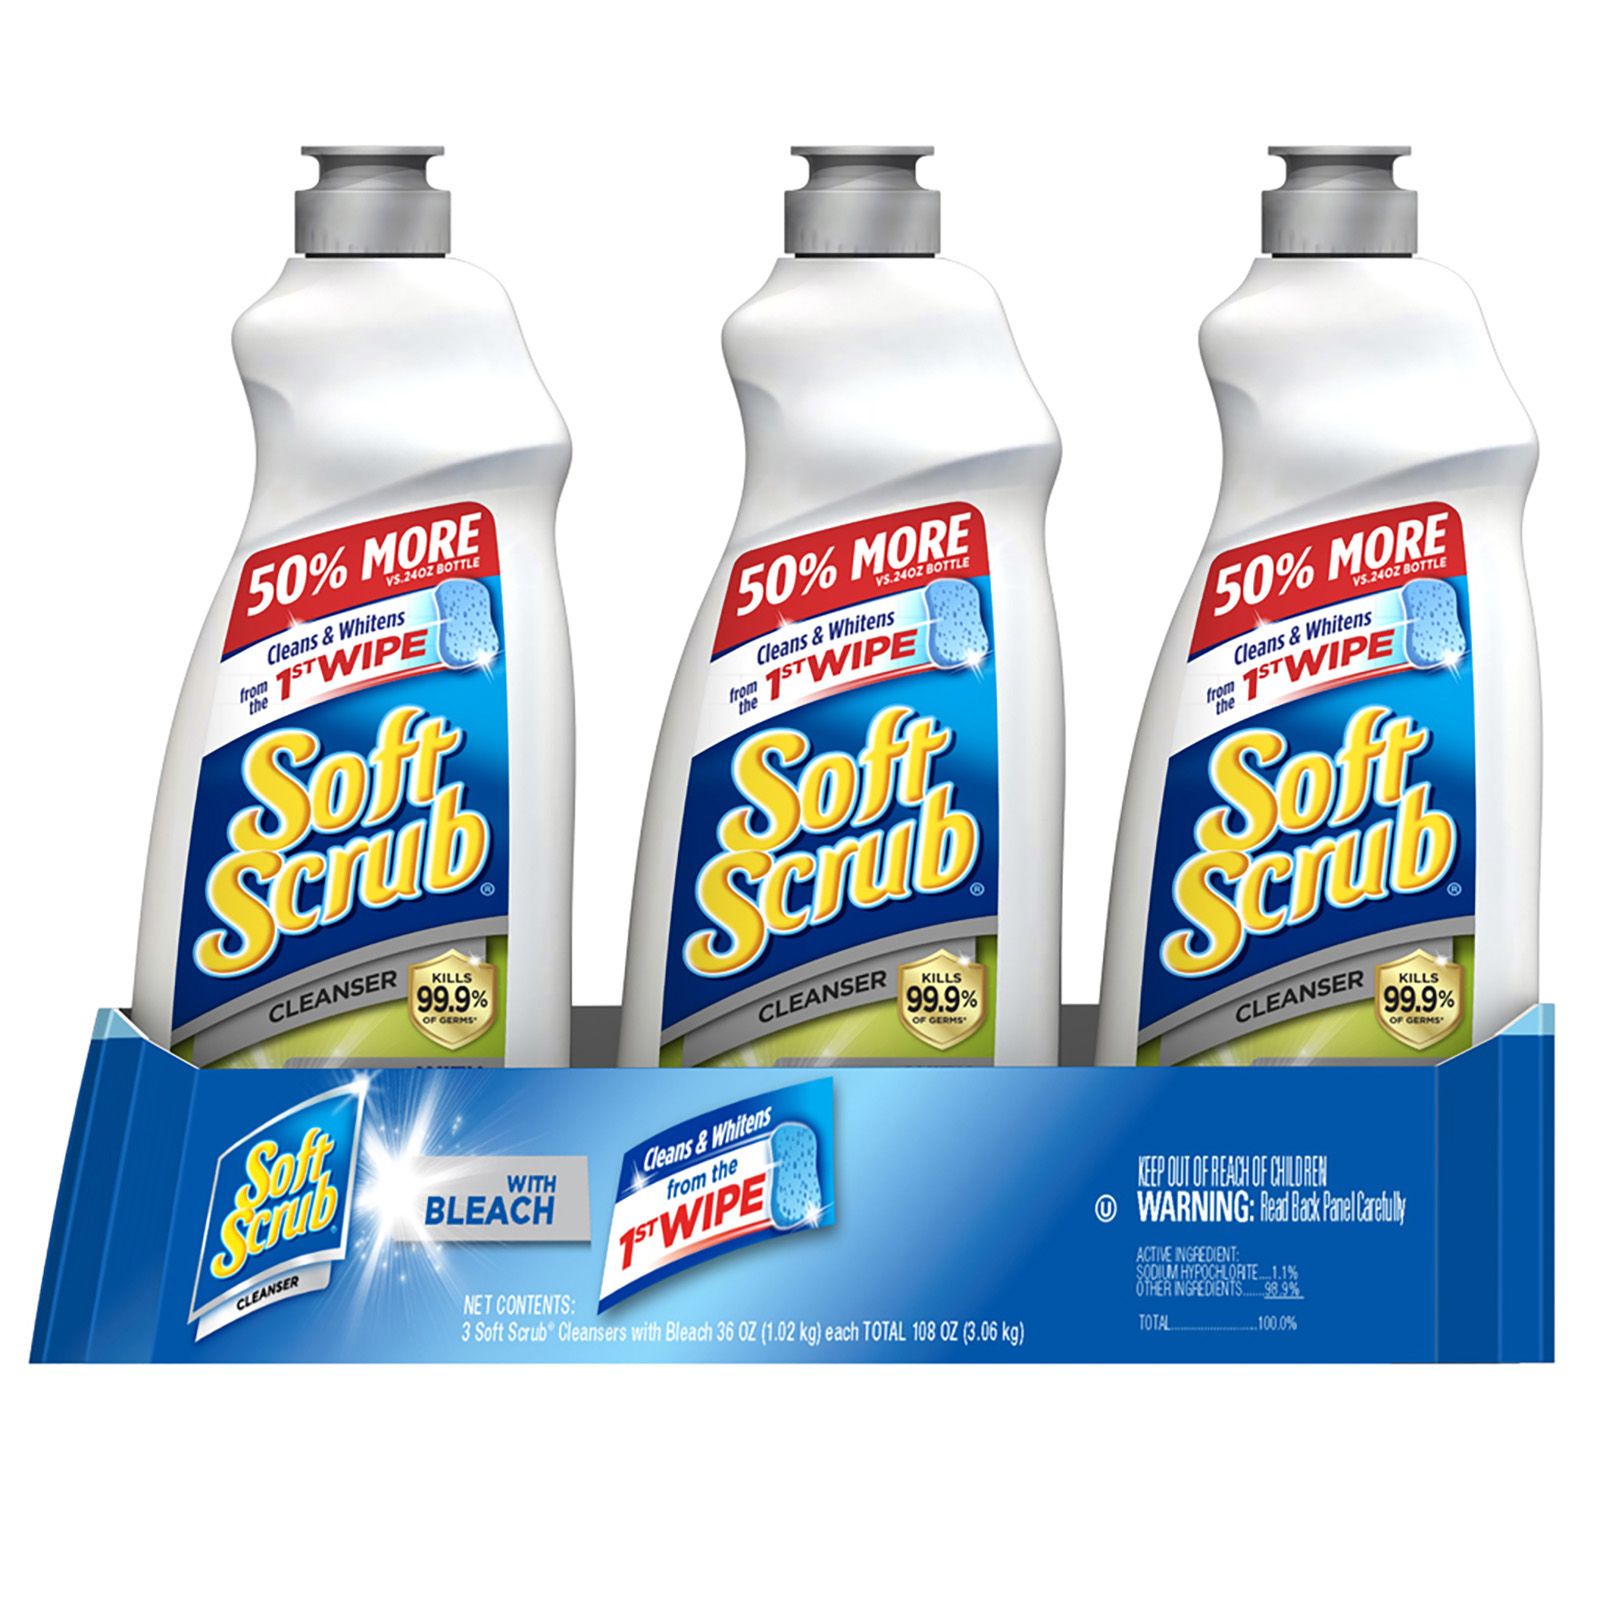 Soft Scrub Multi-Purpose Bathroom Cleanser with Oxi - 36oz